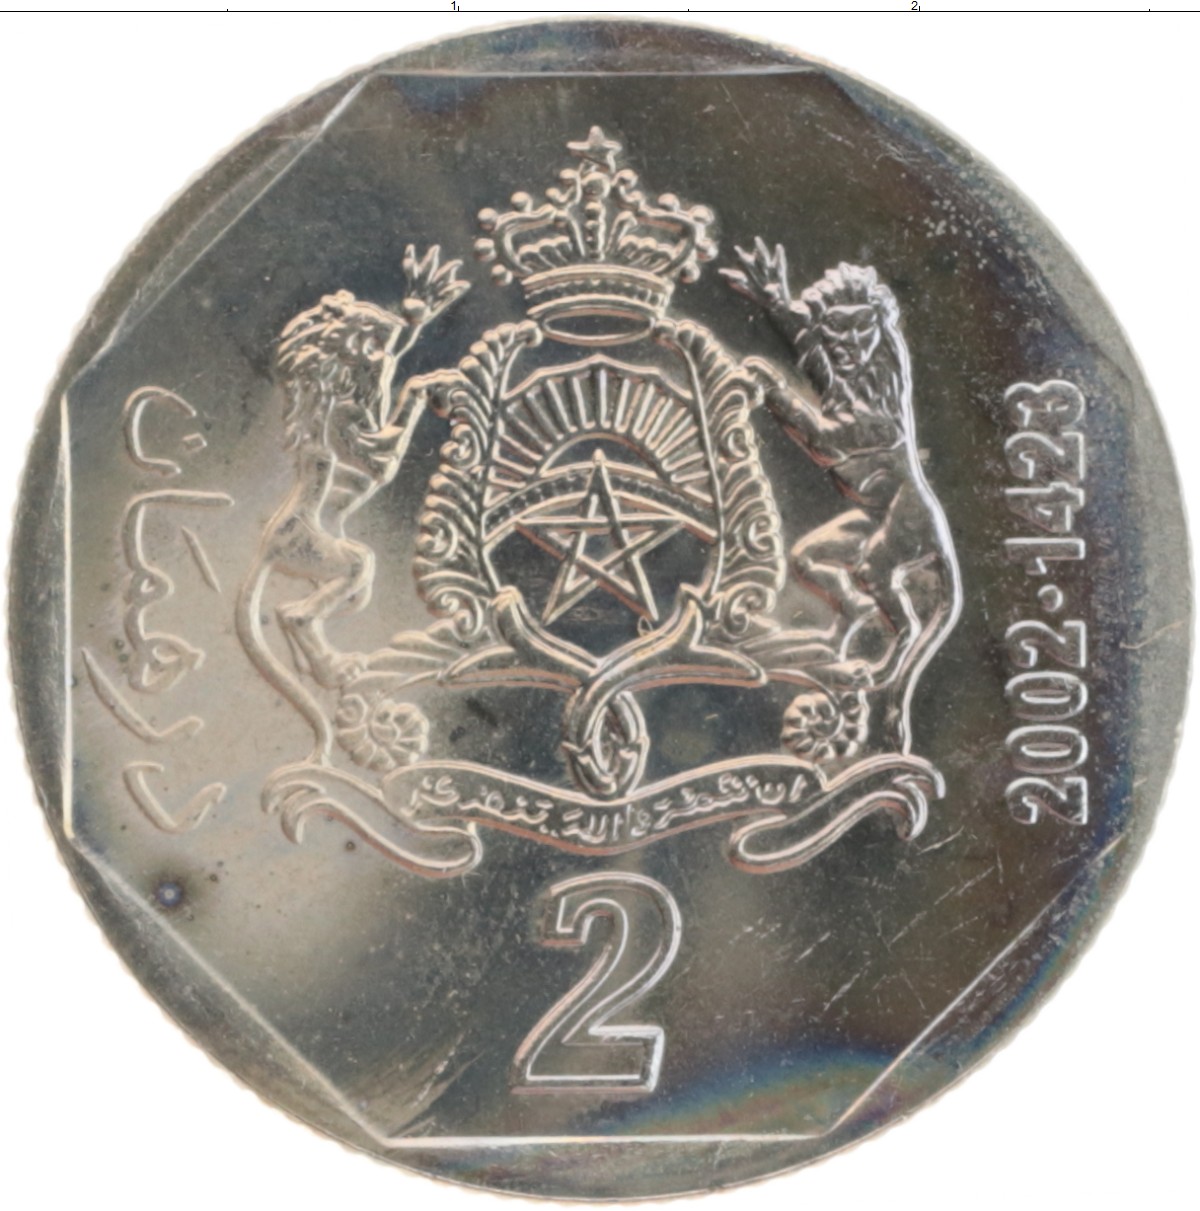 2 дирхама. Монета Марокко 1/2 дирхама 2002. 2 Дирхама монета. Монета 2 дирхама Марокко 2002 года. 2 Дирхама в рублях.